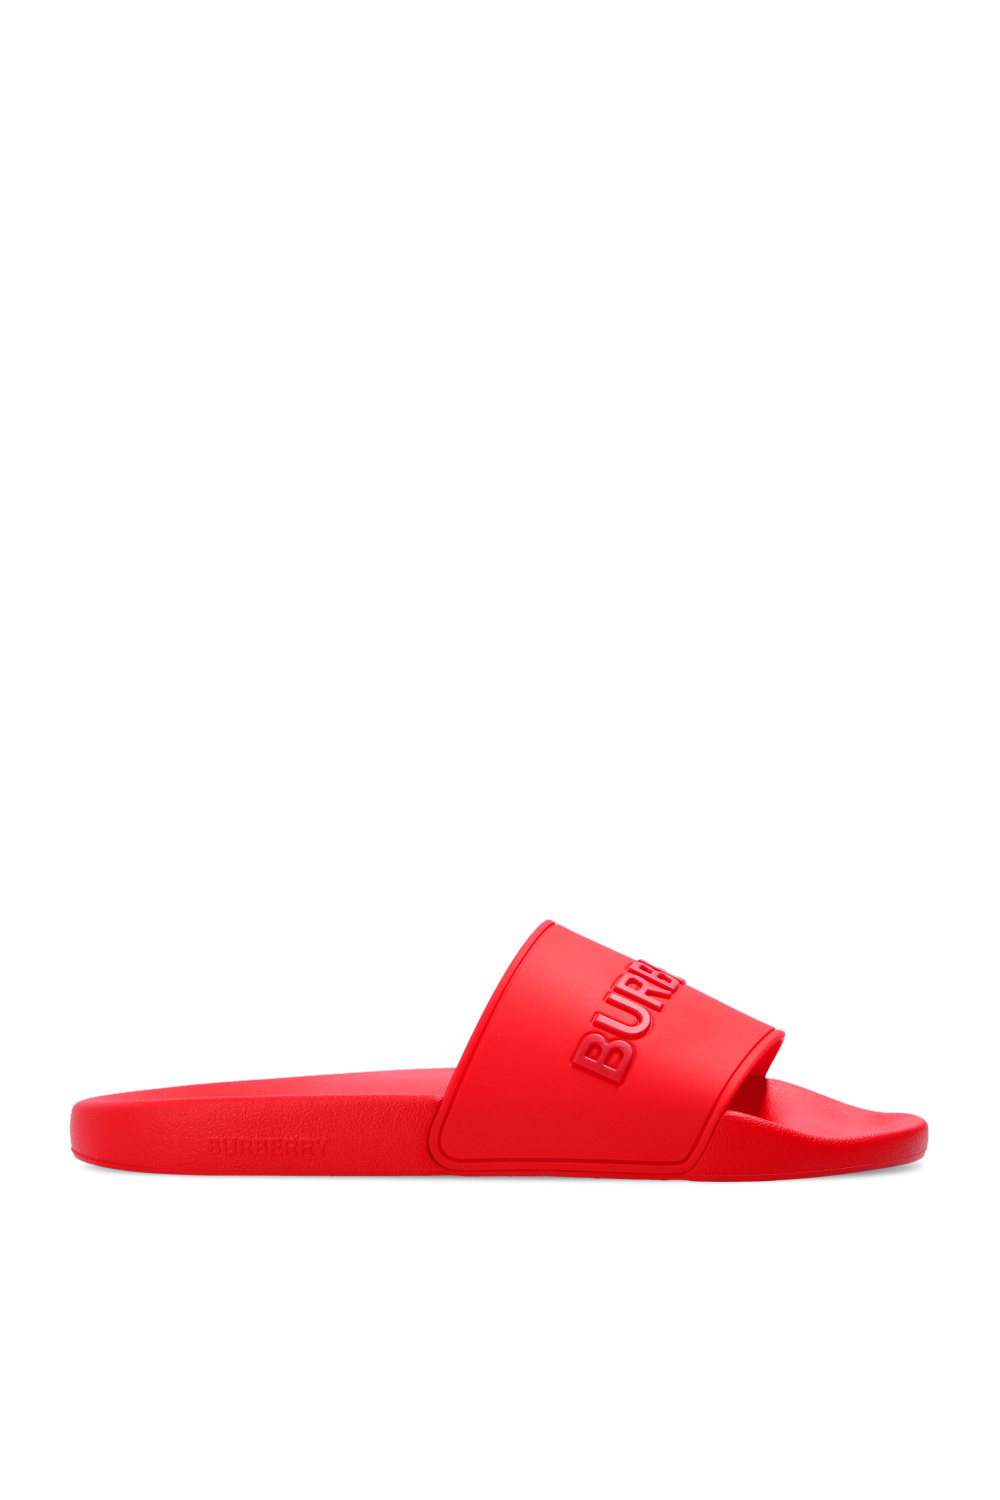 Burberry Slides with logo | Men's Shoes | Vitkac